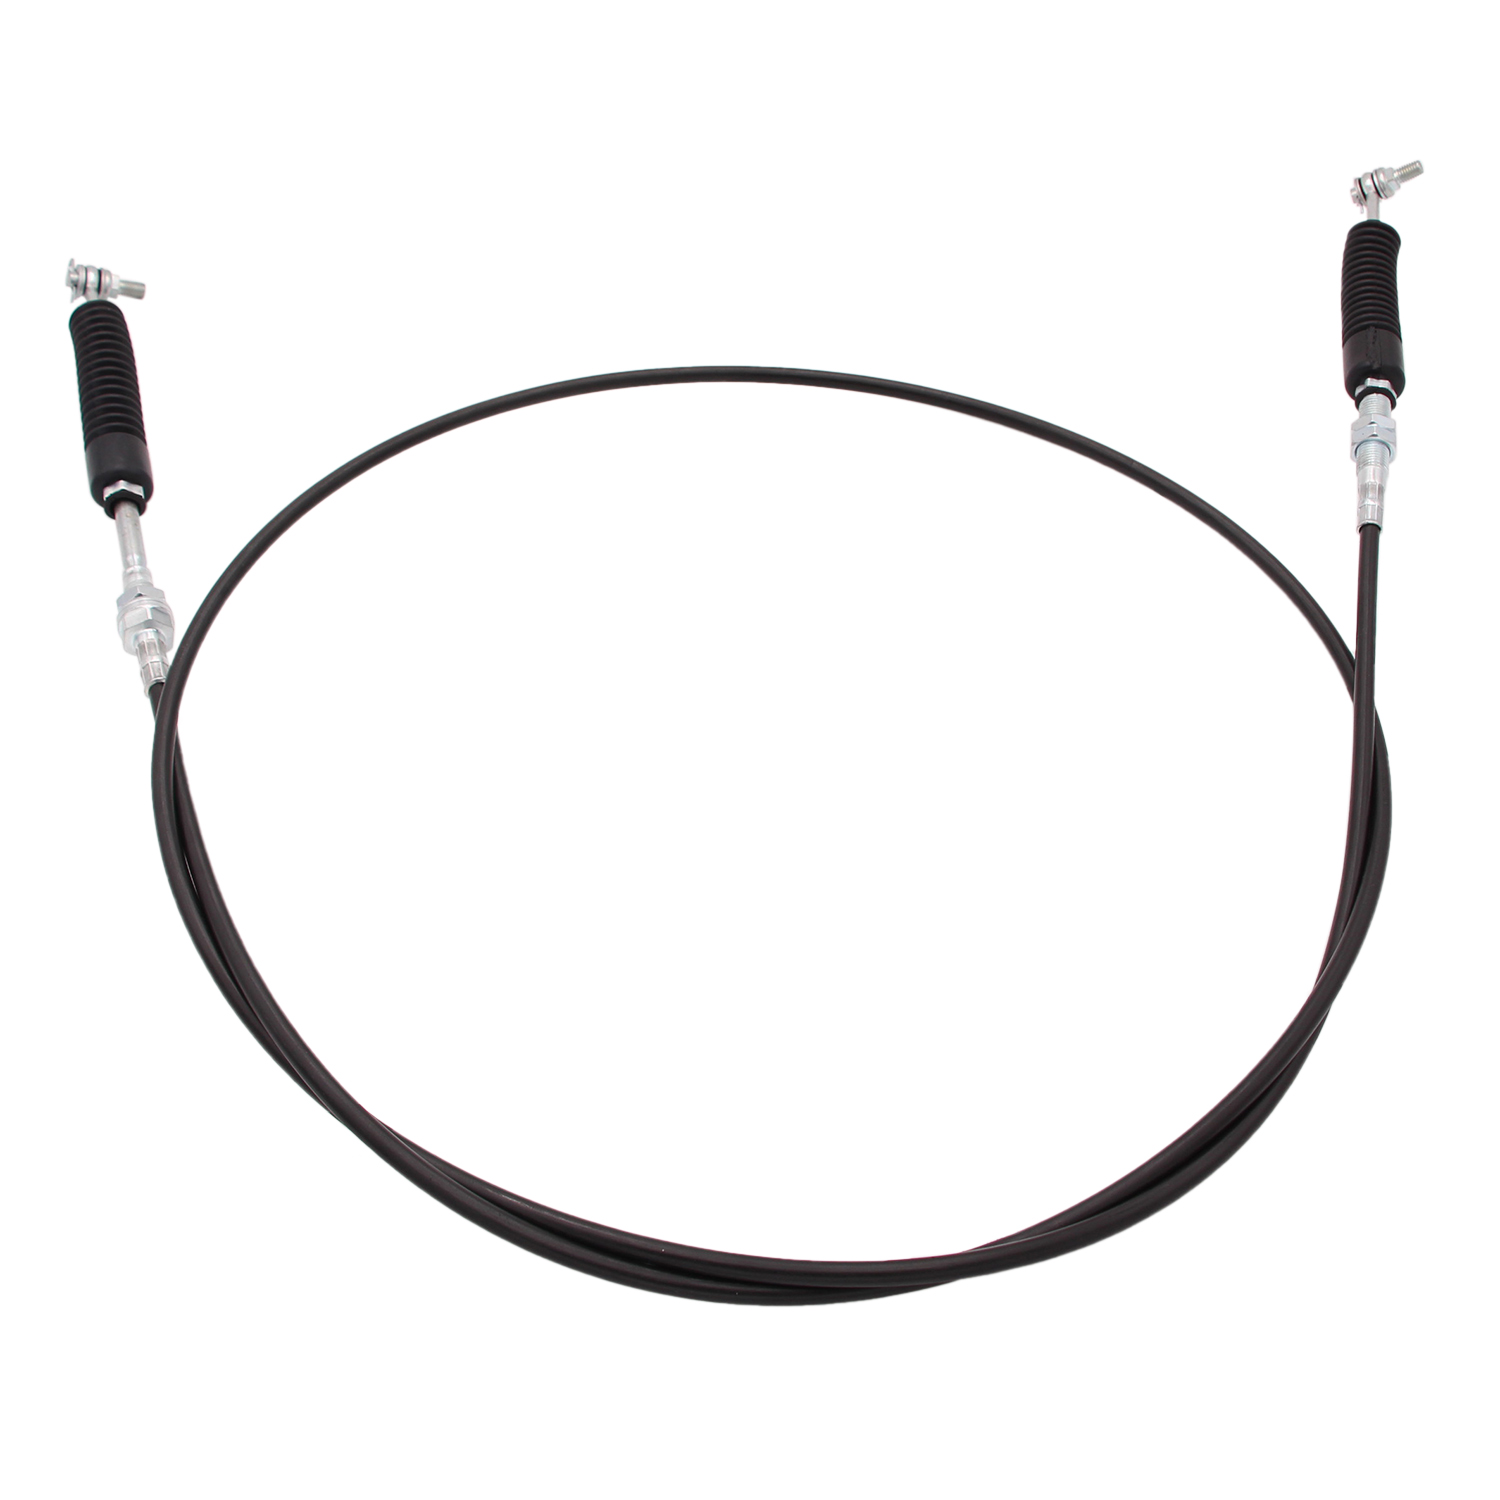 Gear Shift Shifter Cable Fit for Polaris Ranger 500 570 XP 900 1000 ETX ...